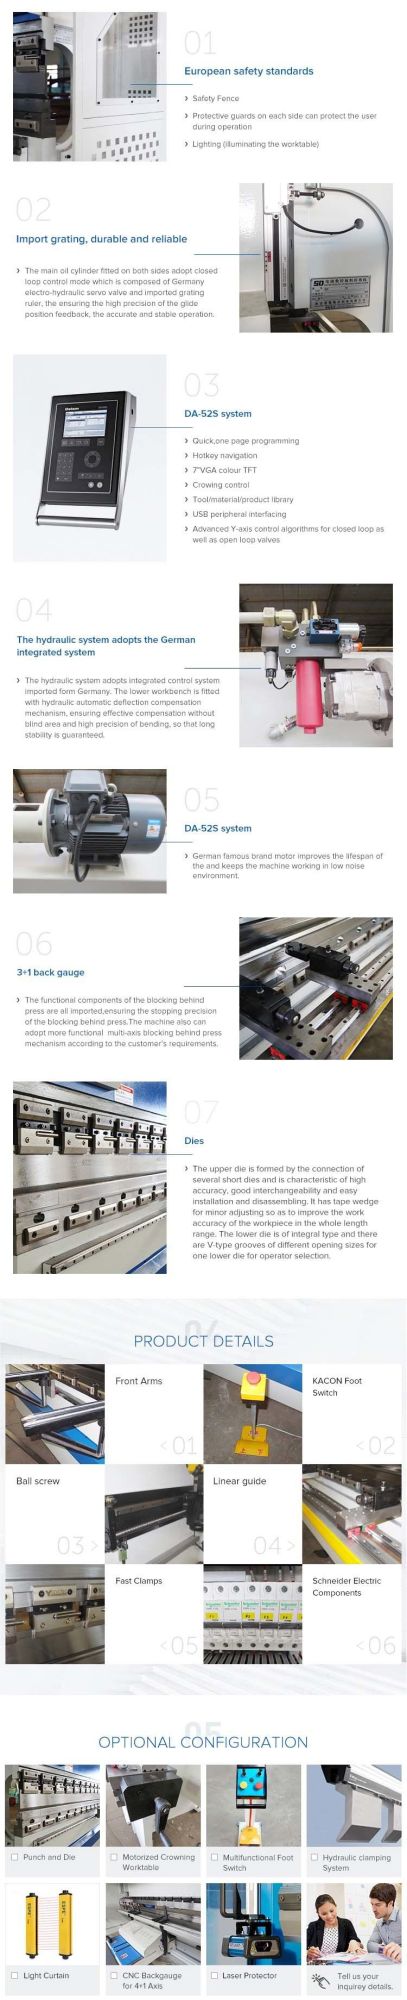 Ysdcnc Hydraulic Sheet Metal Press Brake with Da56s System